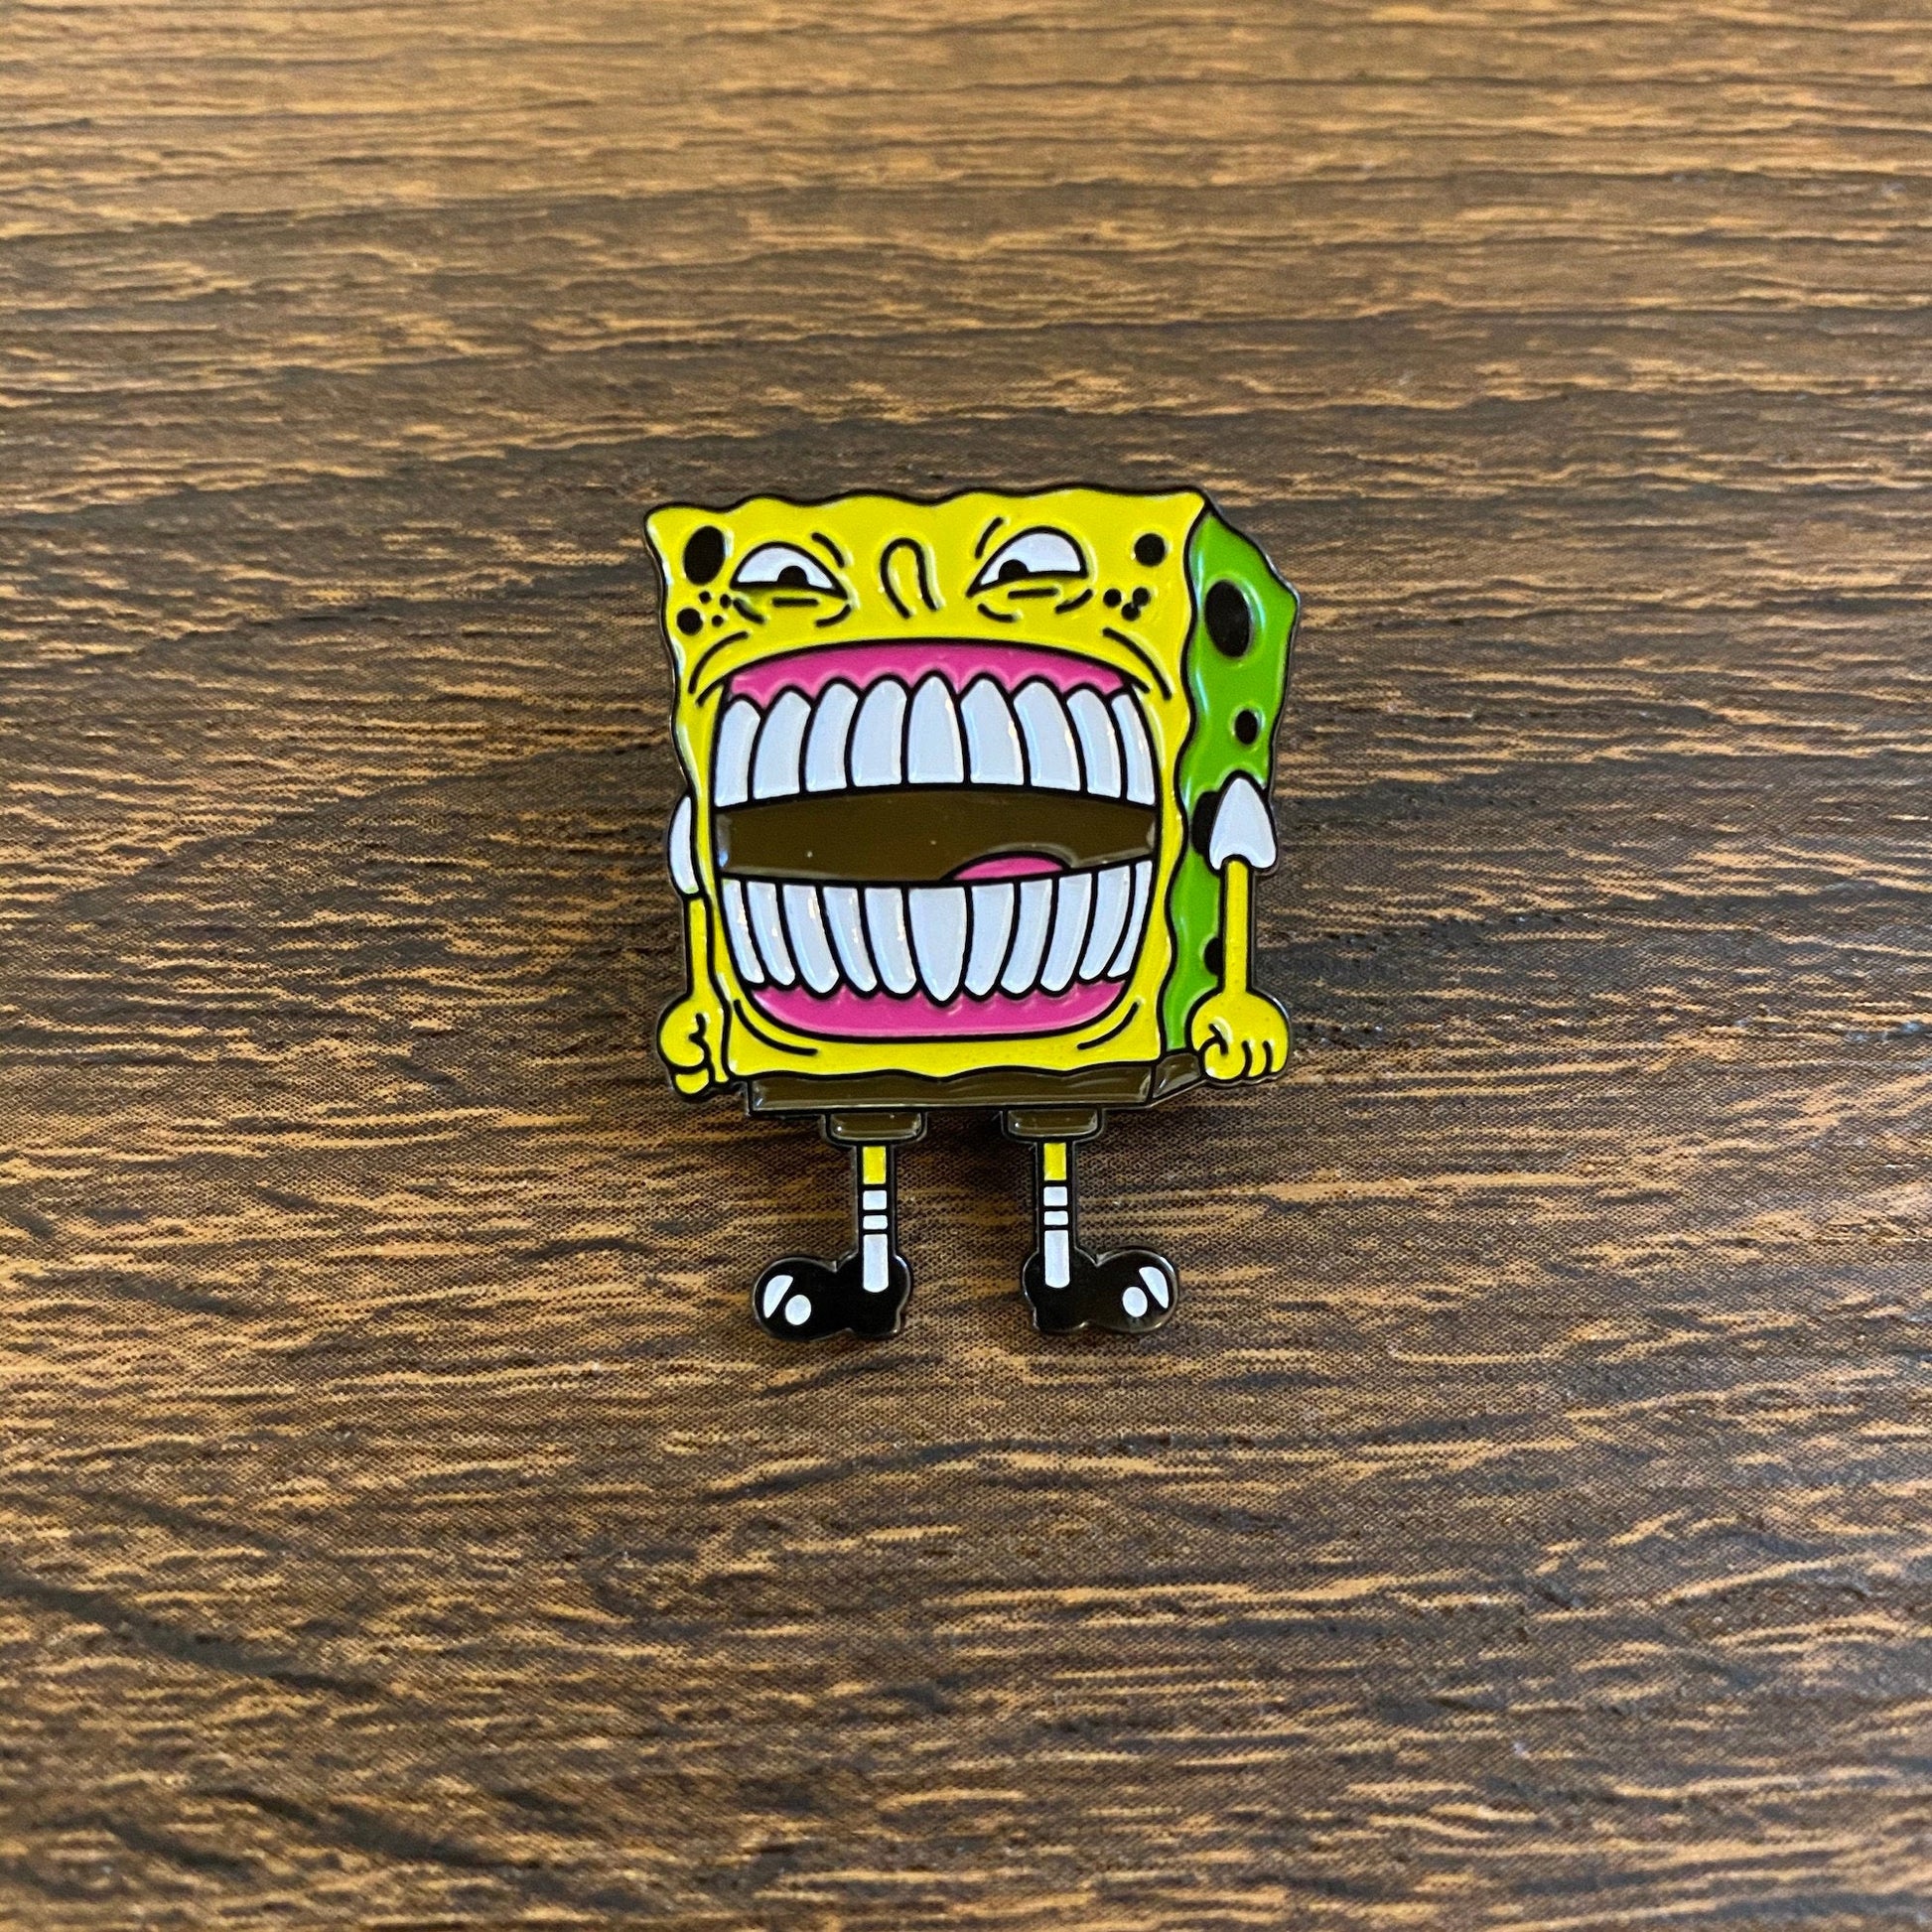 Big Smiles Spongebob Squarepants Enamel Pin - thehappypin